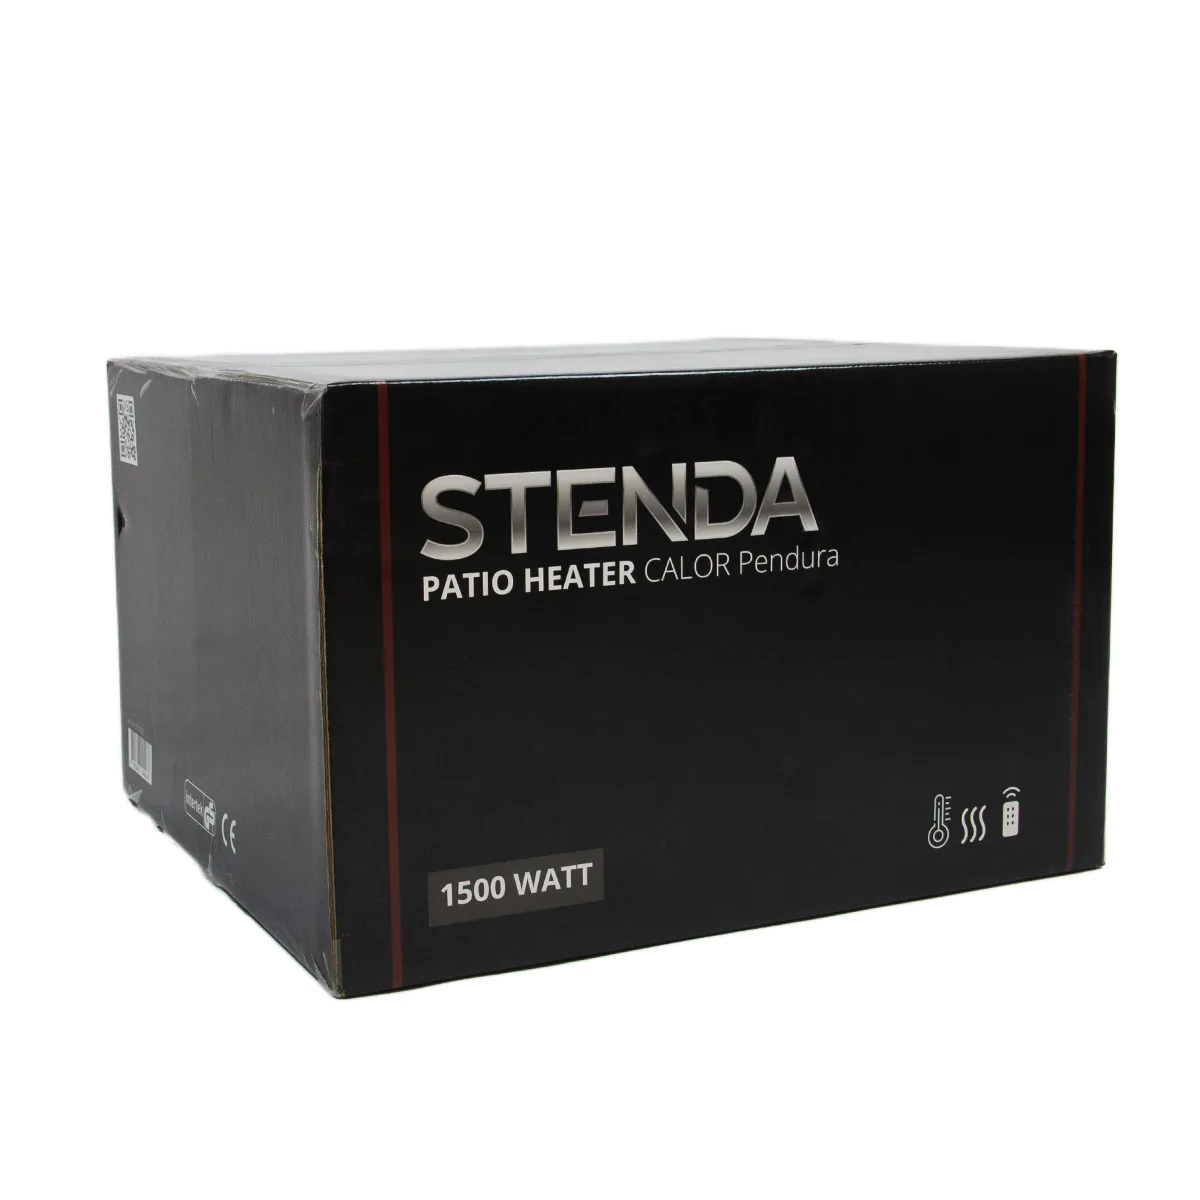 Stenda Patioheater Calor Pendura 1500 Watt